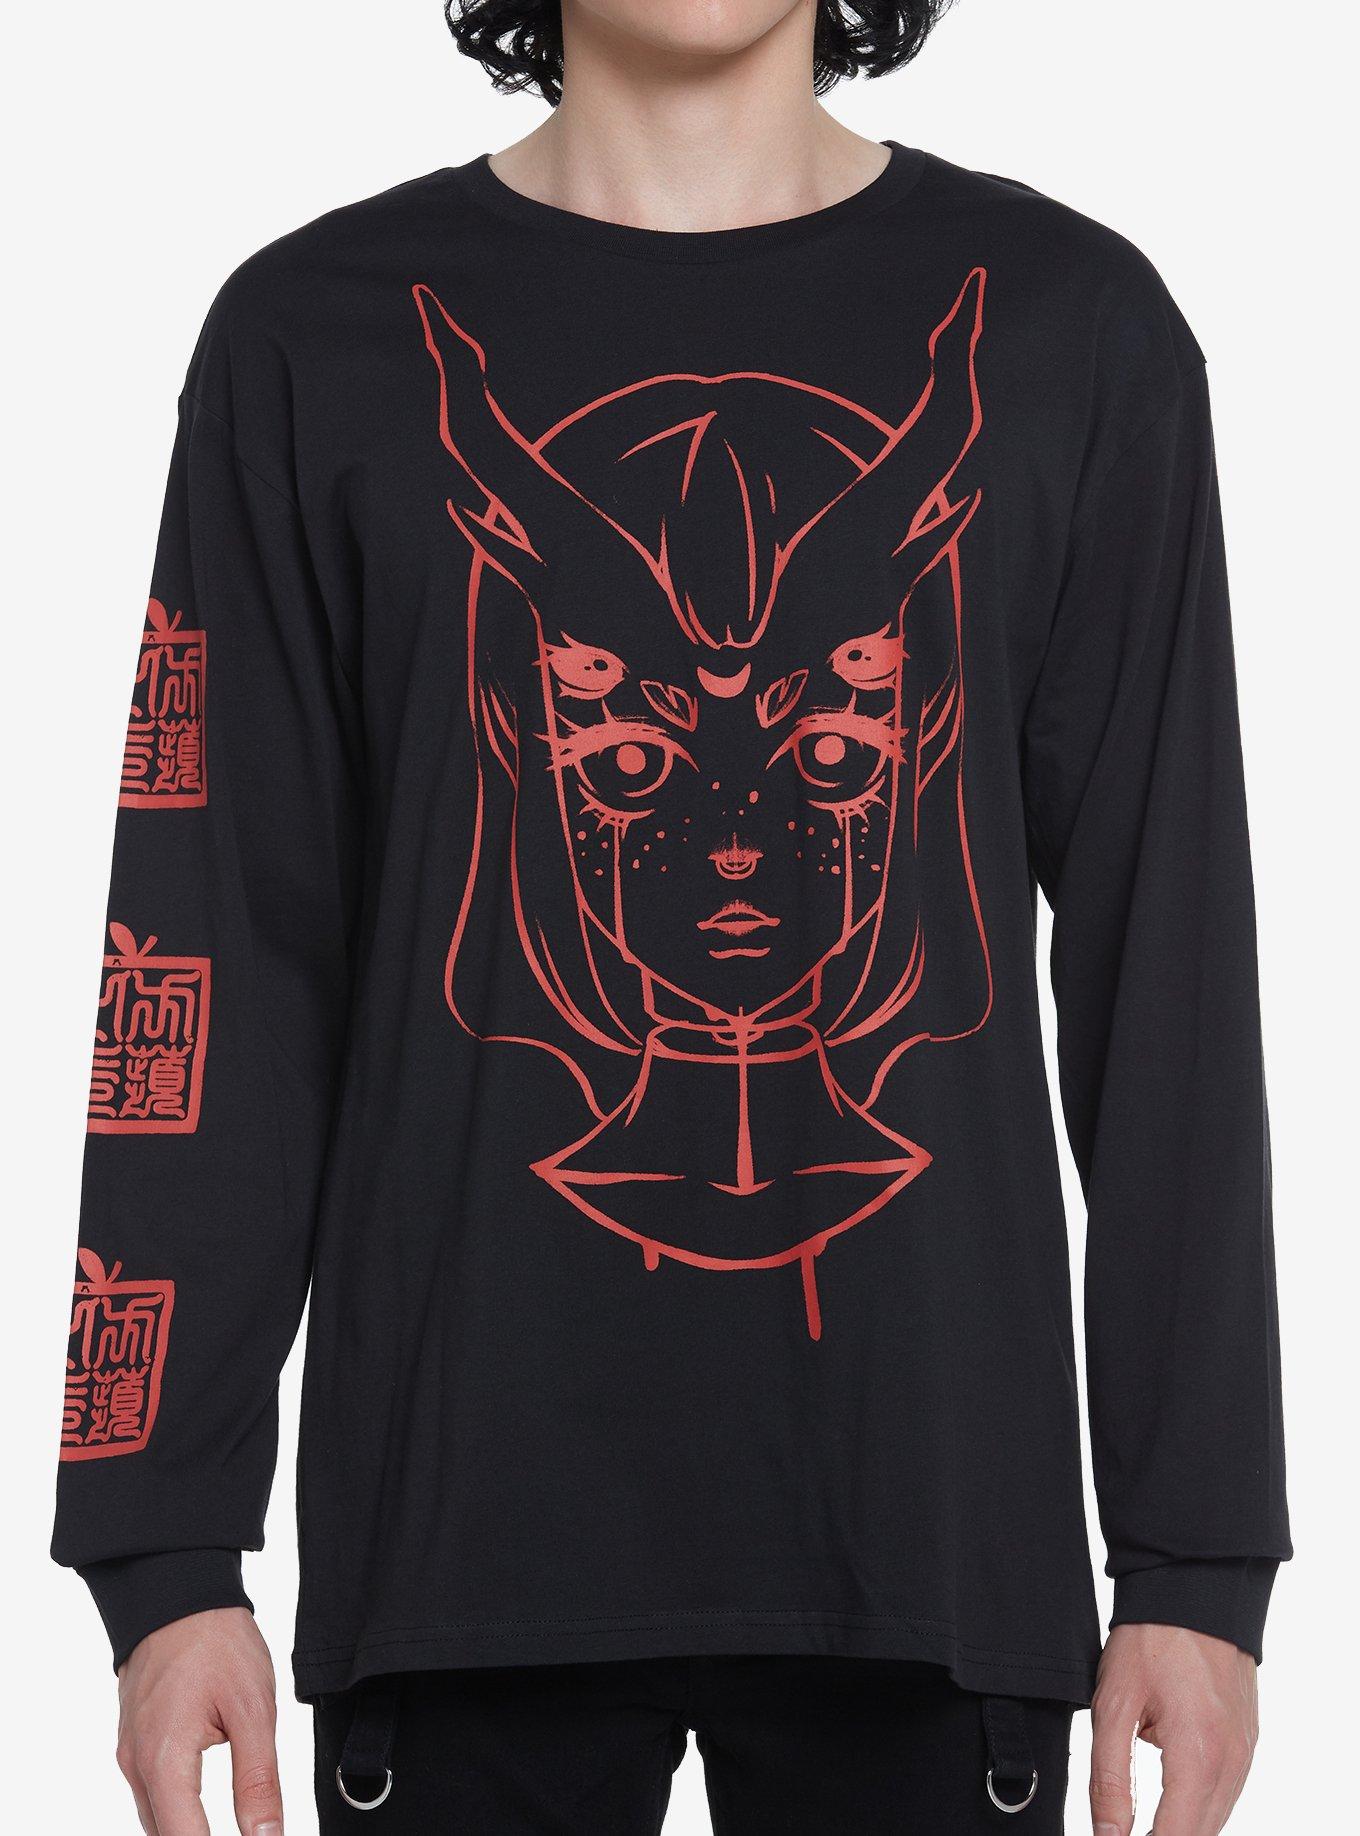 Deer Demon Girl Long-Sleeve T-Shirt By Square Apple Studios, BLACK, hi-res